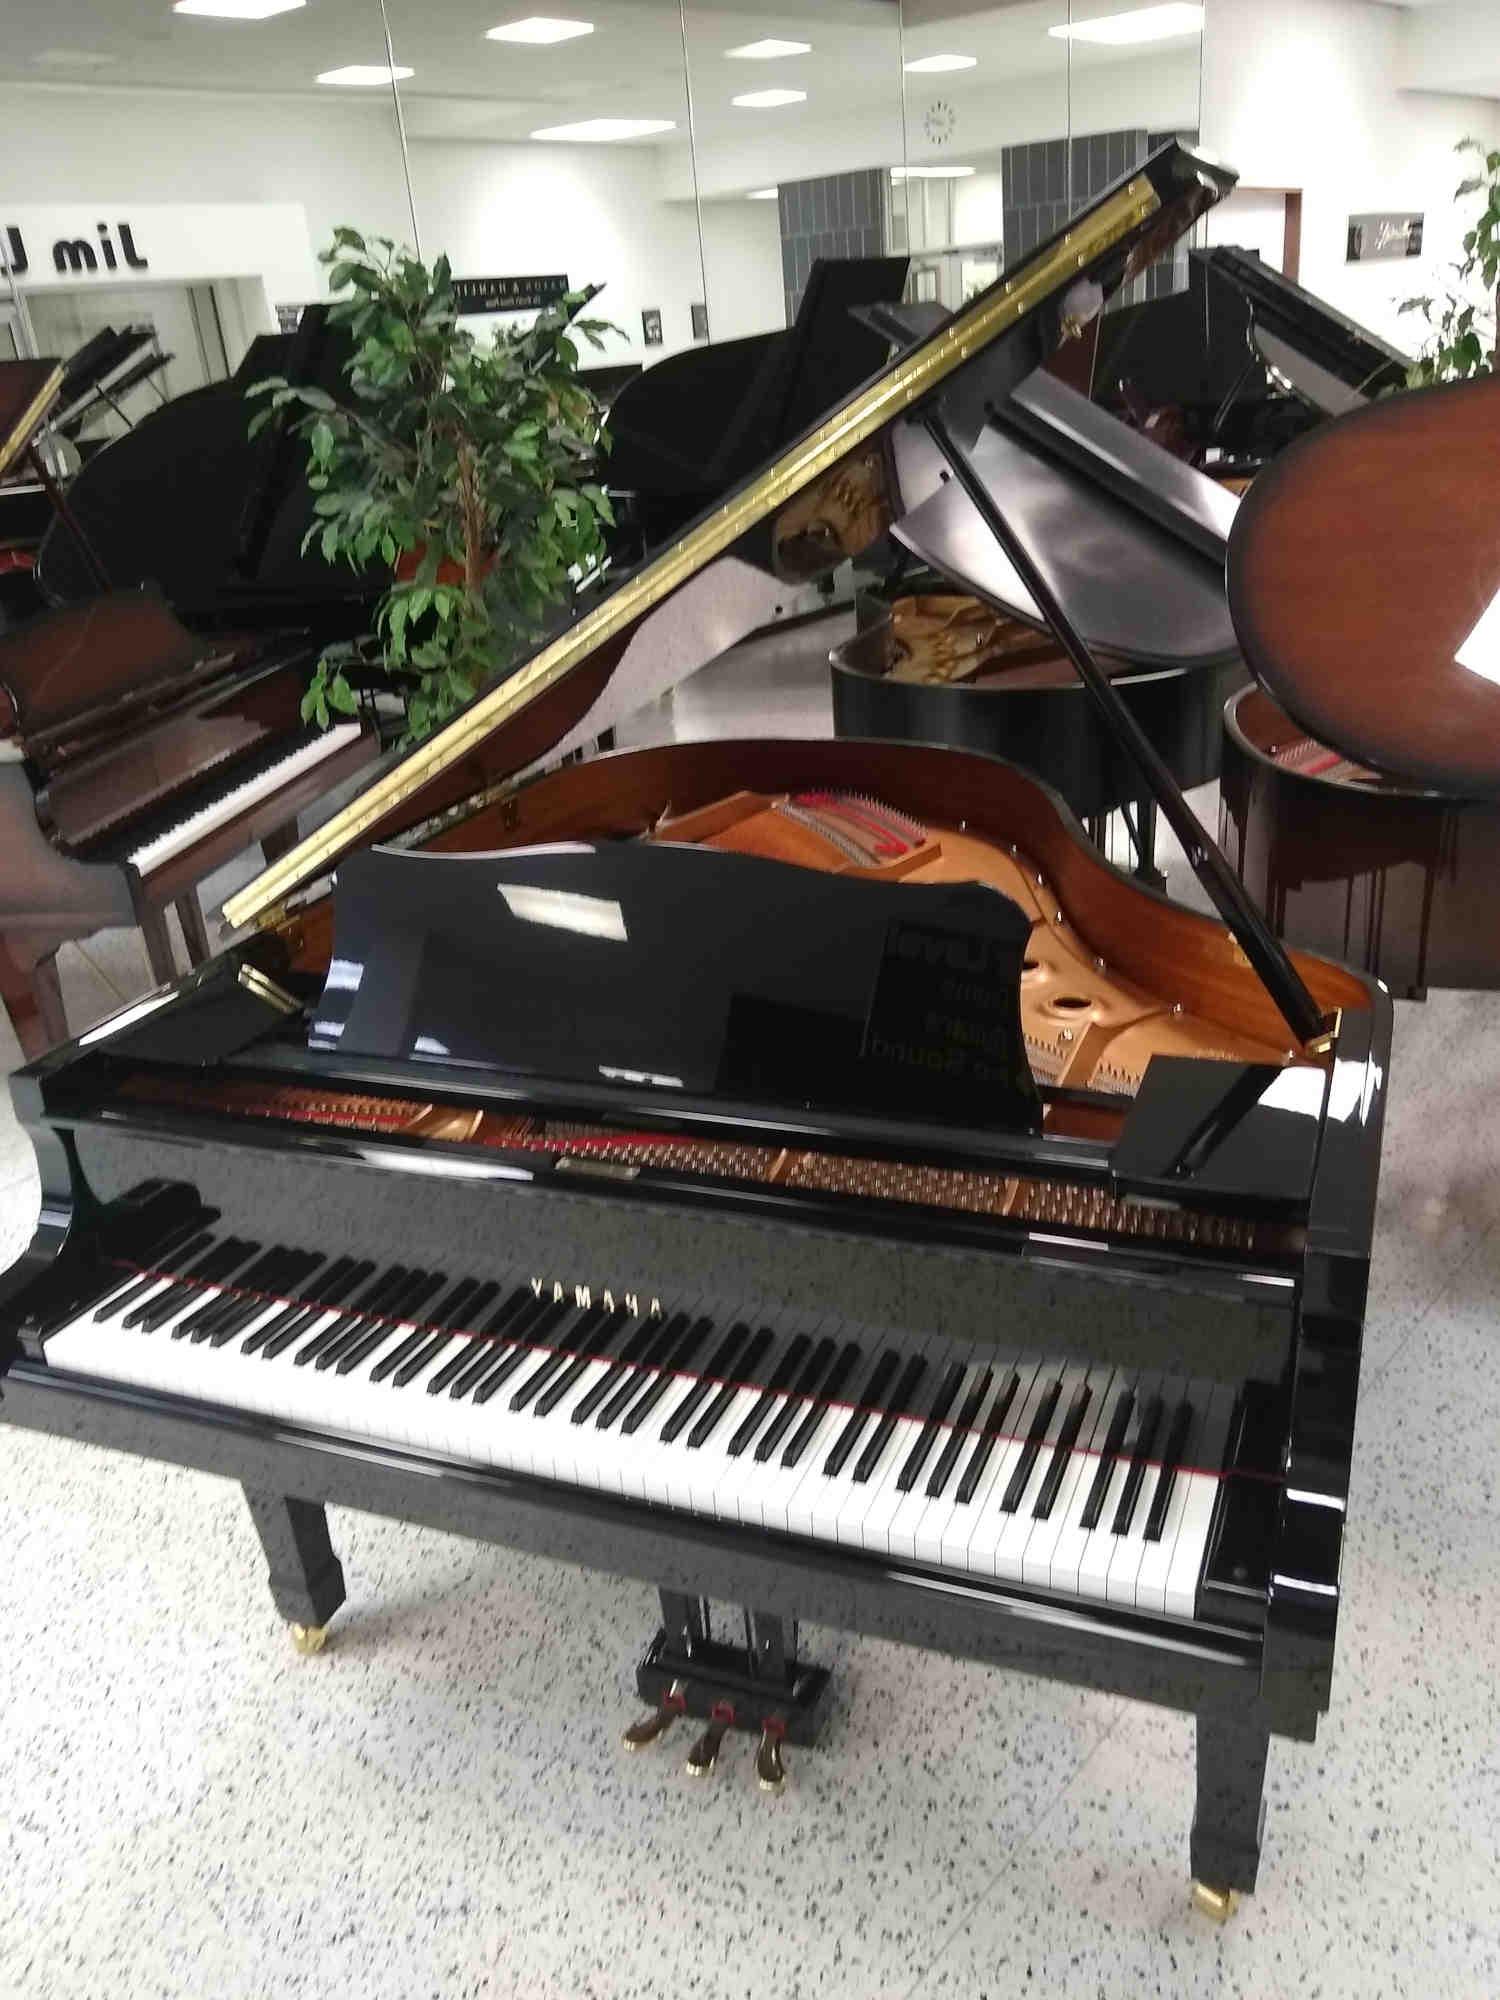 Yamaha C2 Grand Piano 5'8 Black Polish